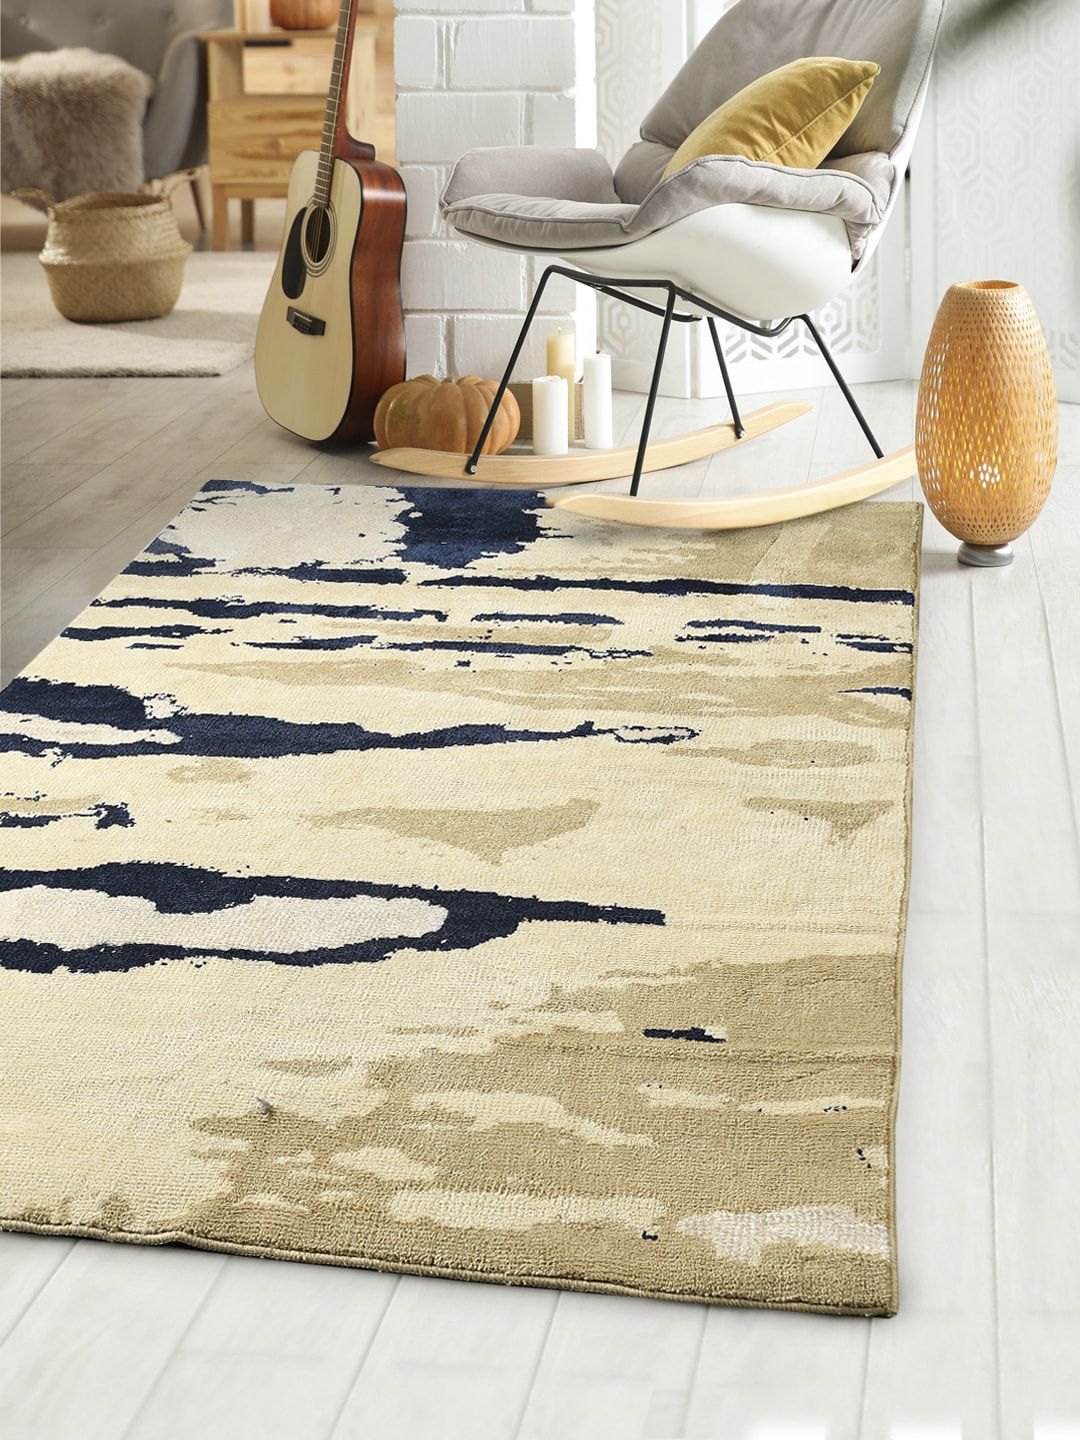 Saral Home Beige & Navy Blue Textured Cotton Rectangular Carpet Price in India